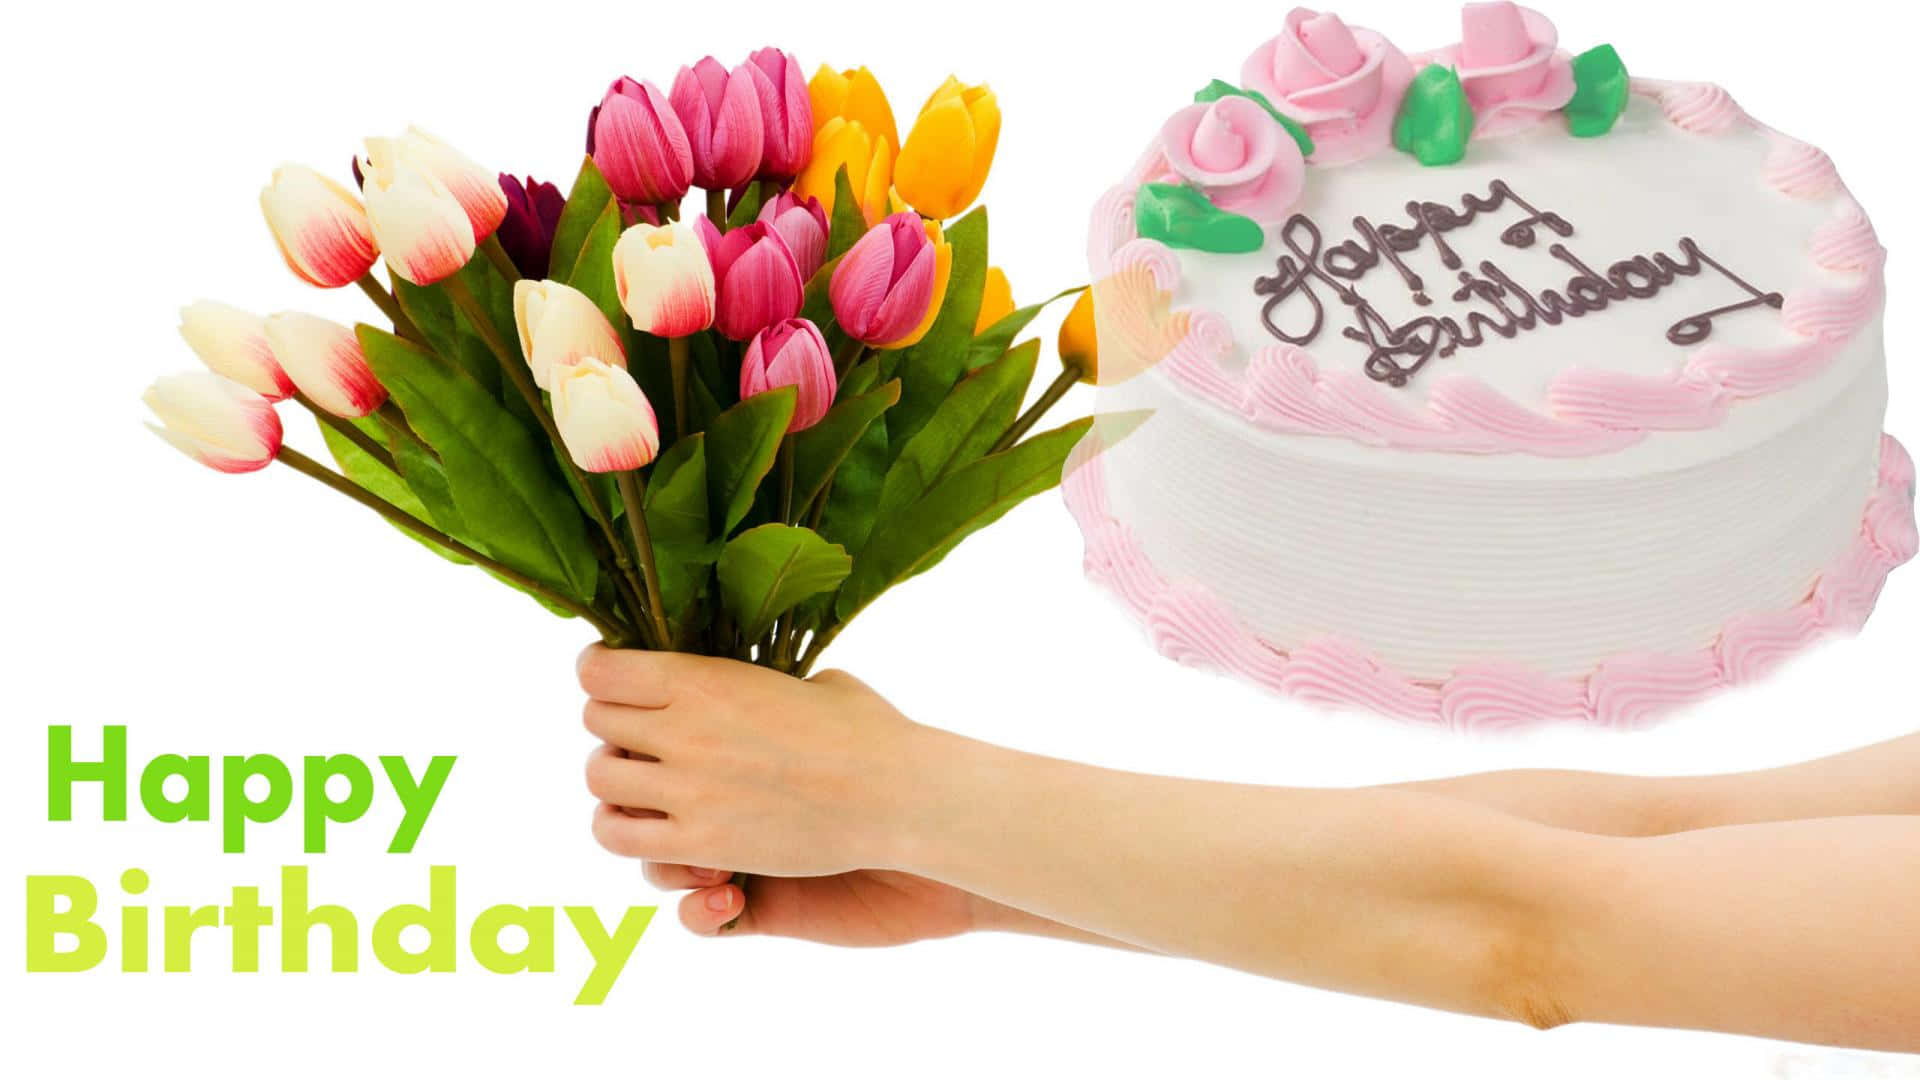 Birthday Cake Images - Free Download on Freepik